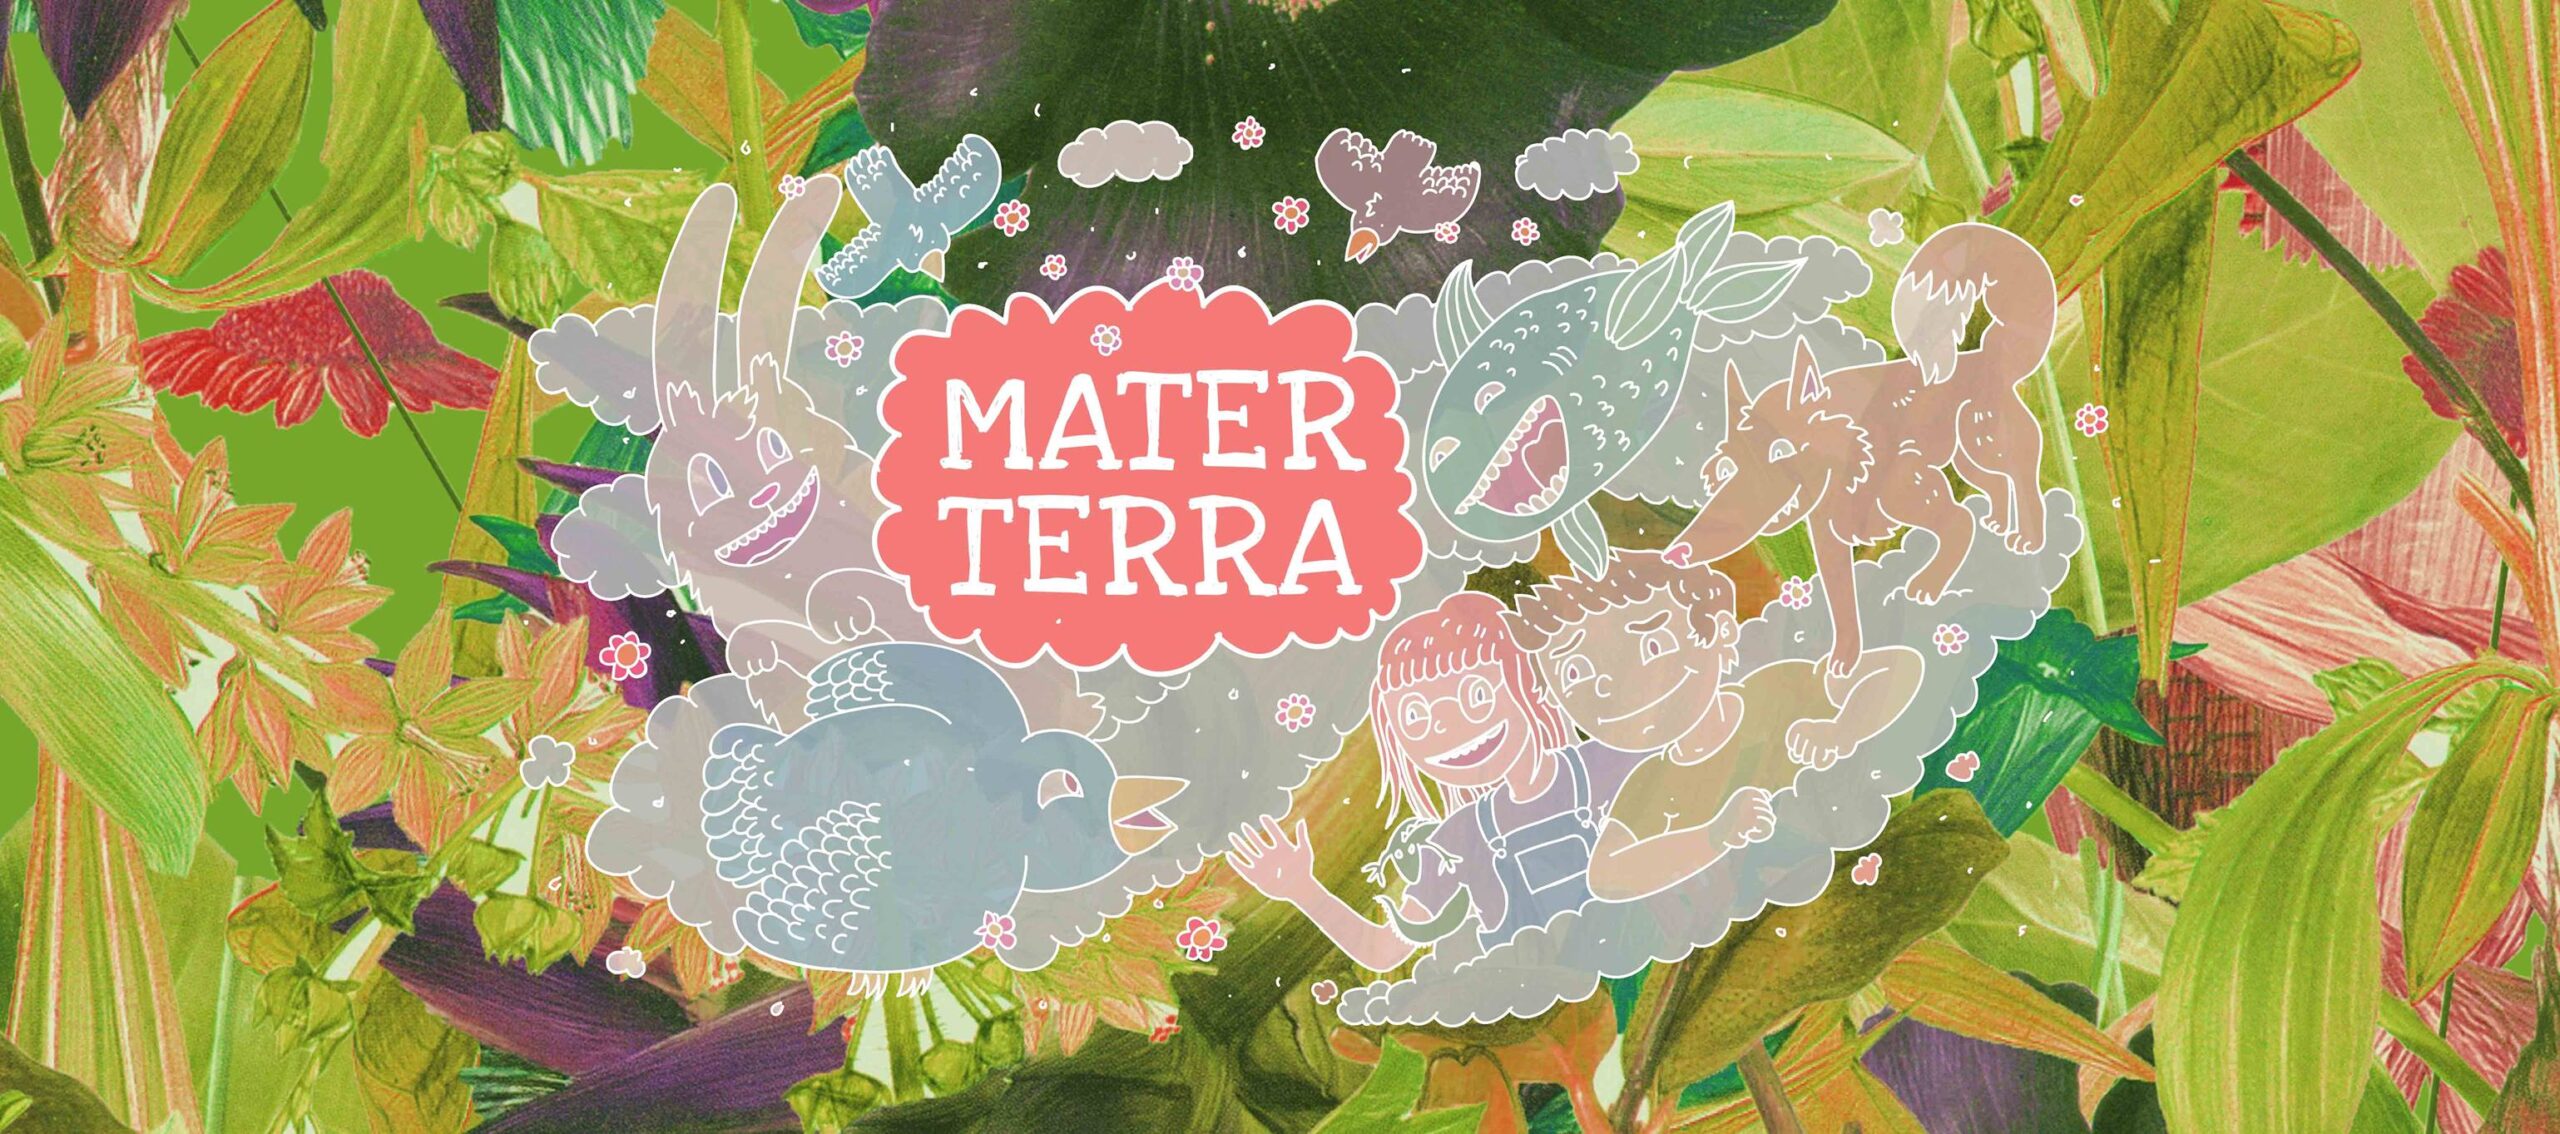 MATER TERRA logo scaled